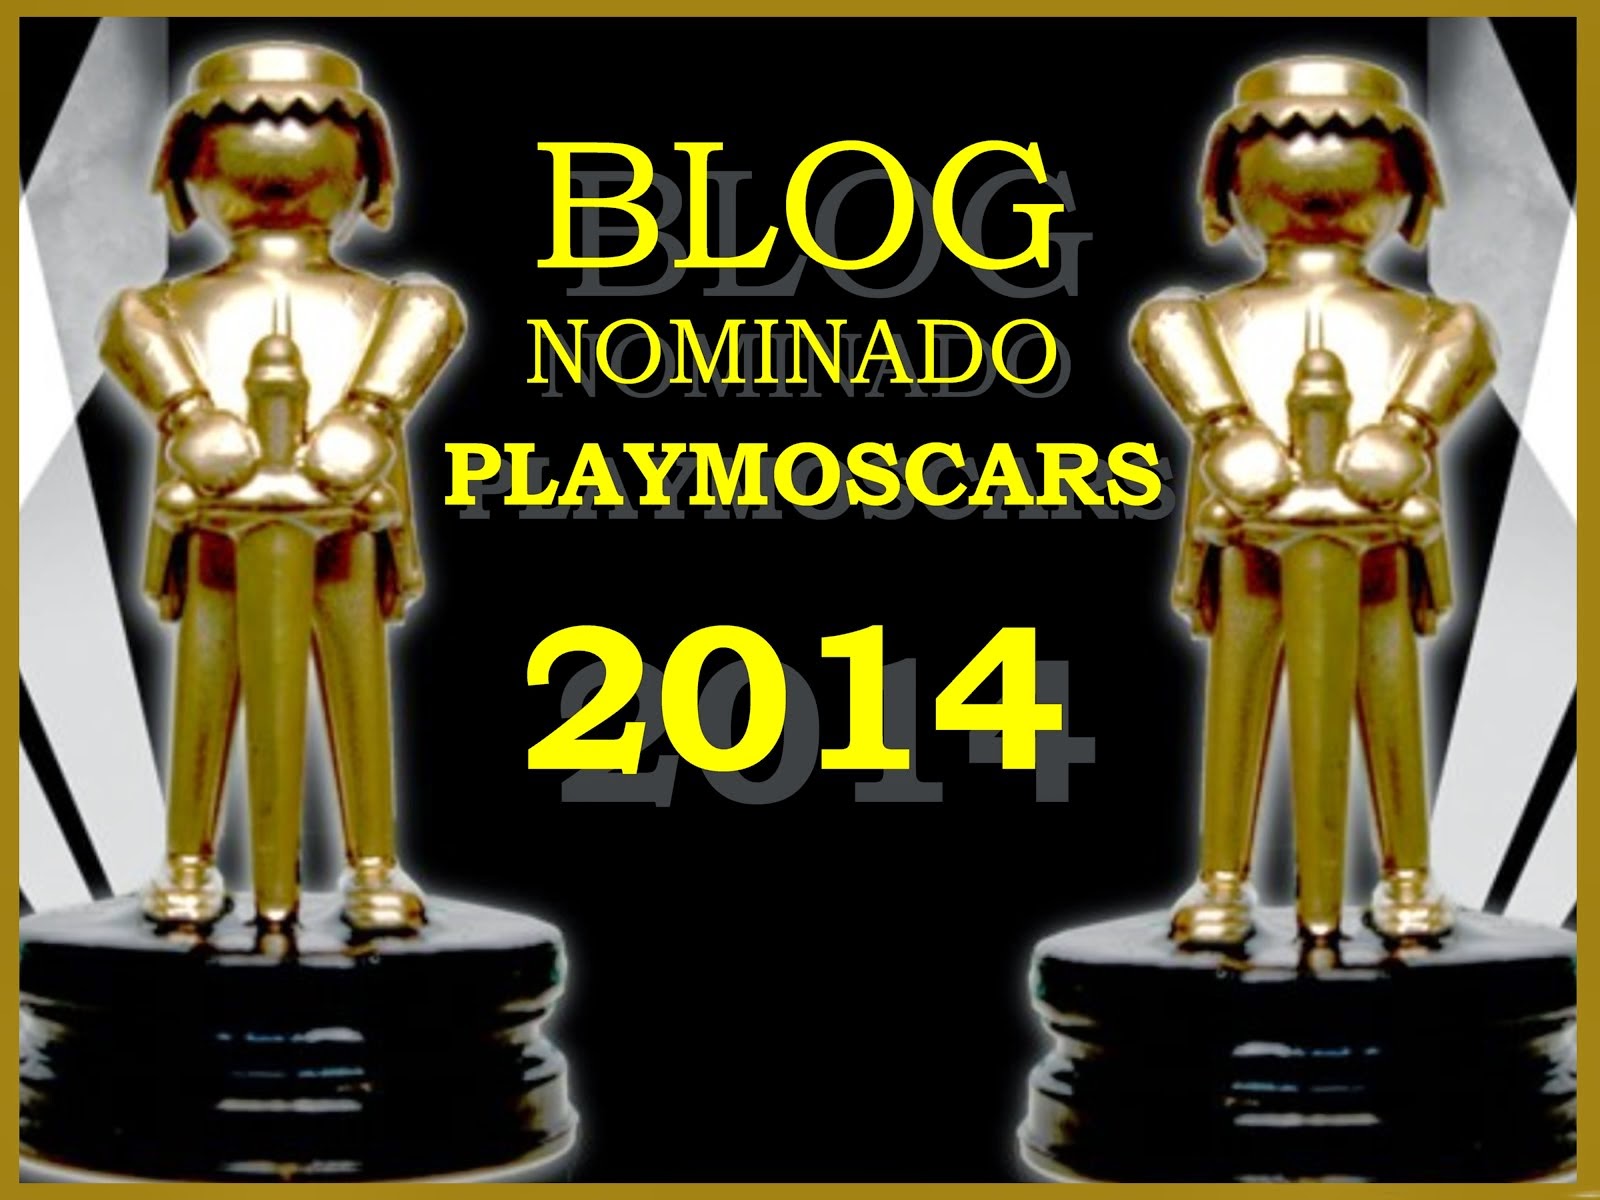 Blog nominado playmoscars 2014